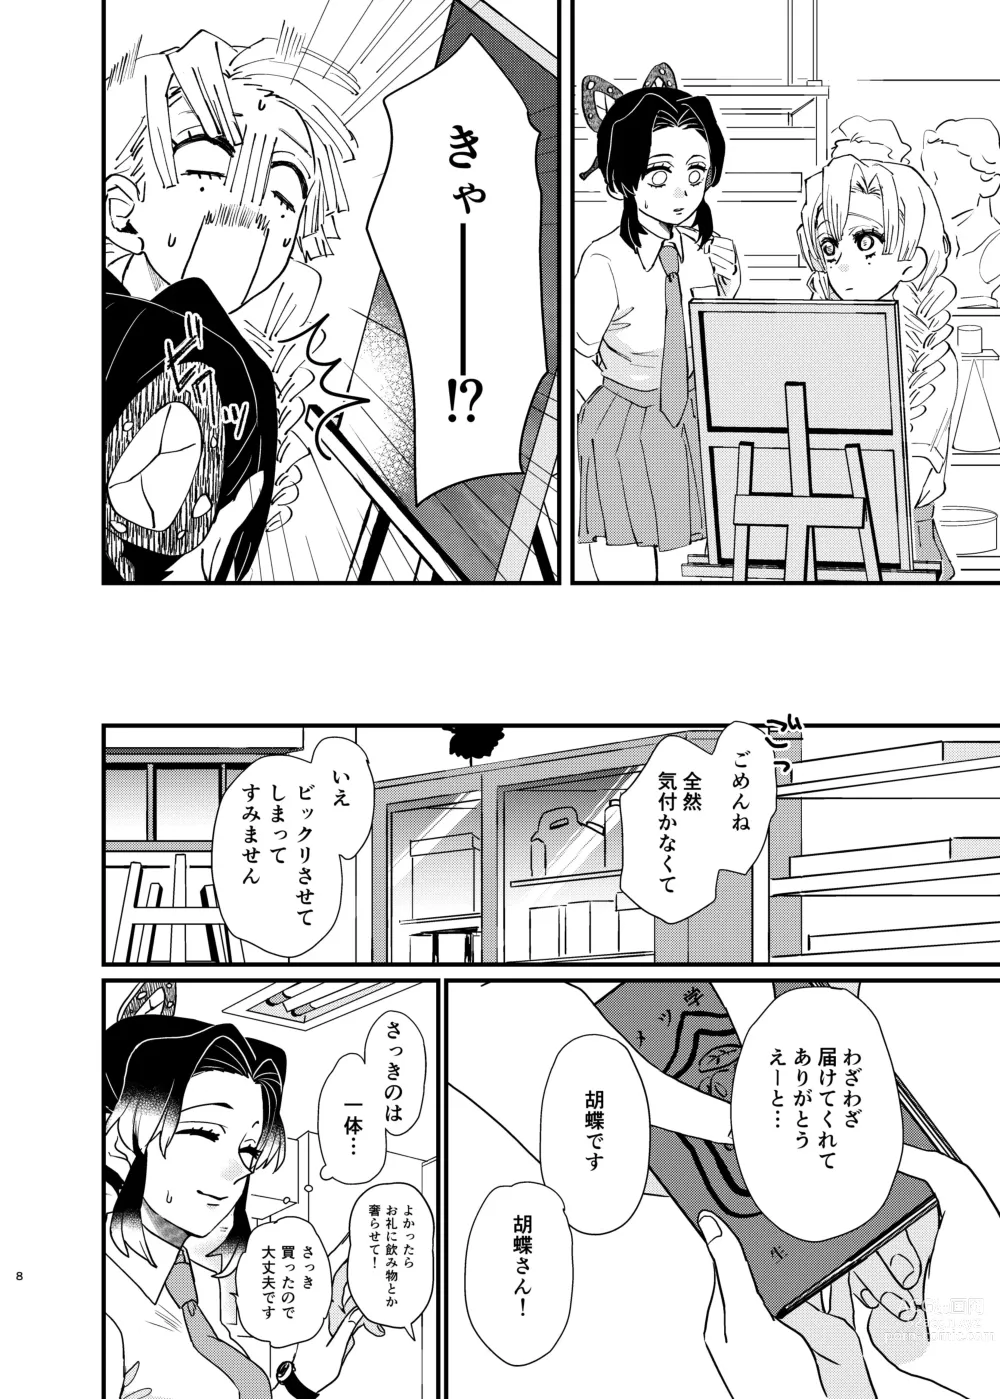 Page 8 of doujinshi Watashi no Alpha